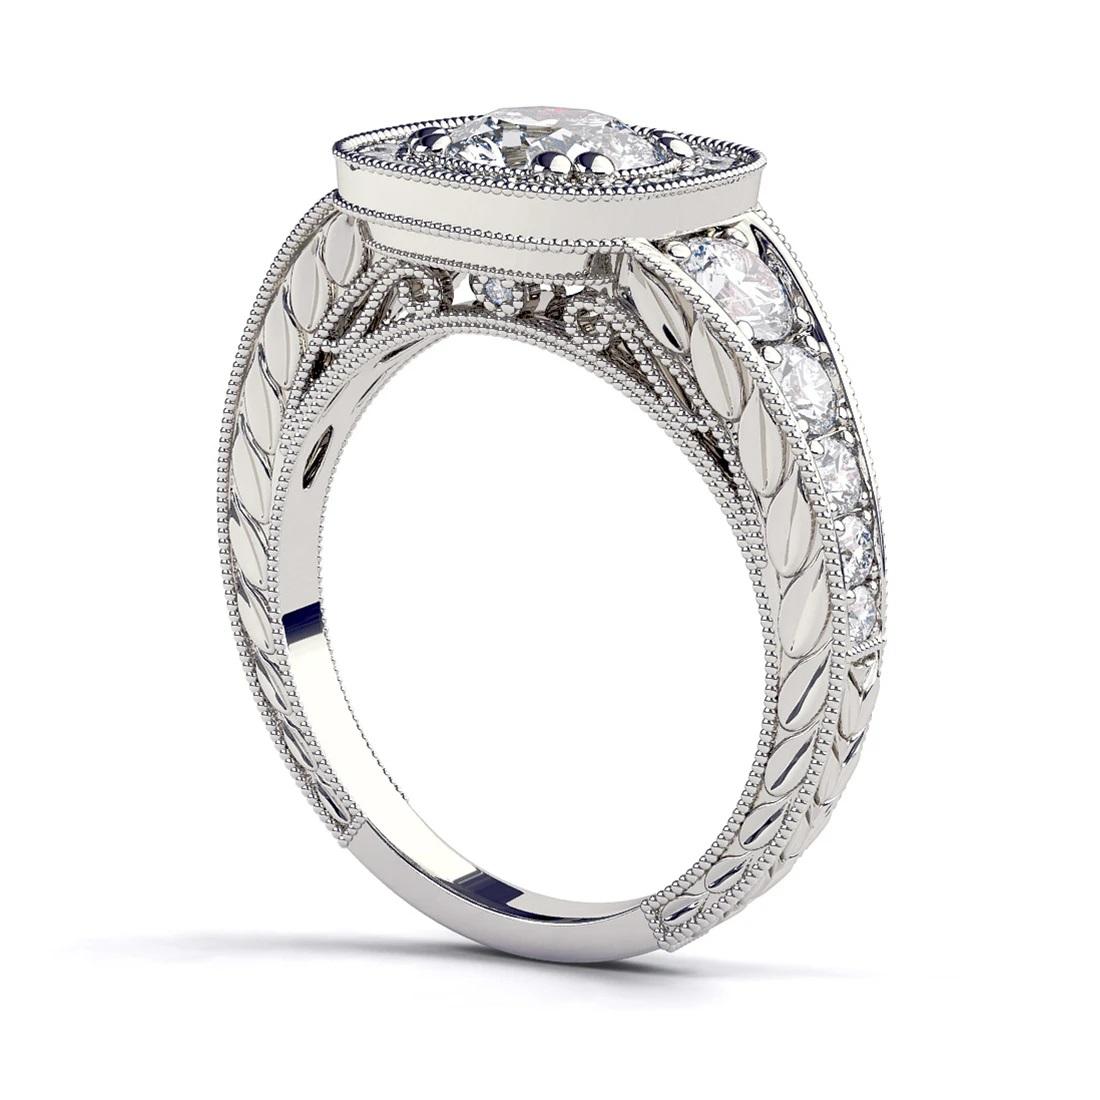 1.8 carat round diamond ring